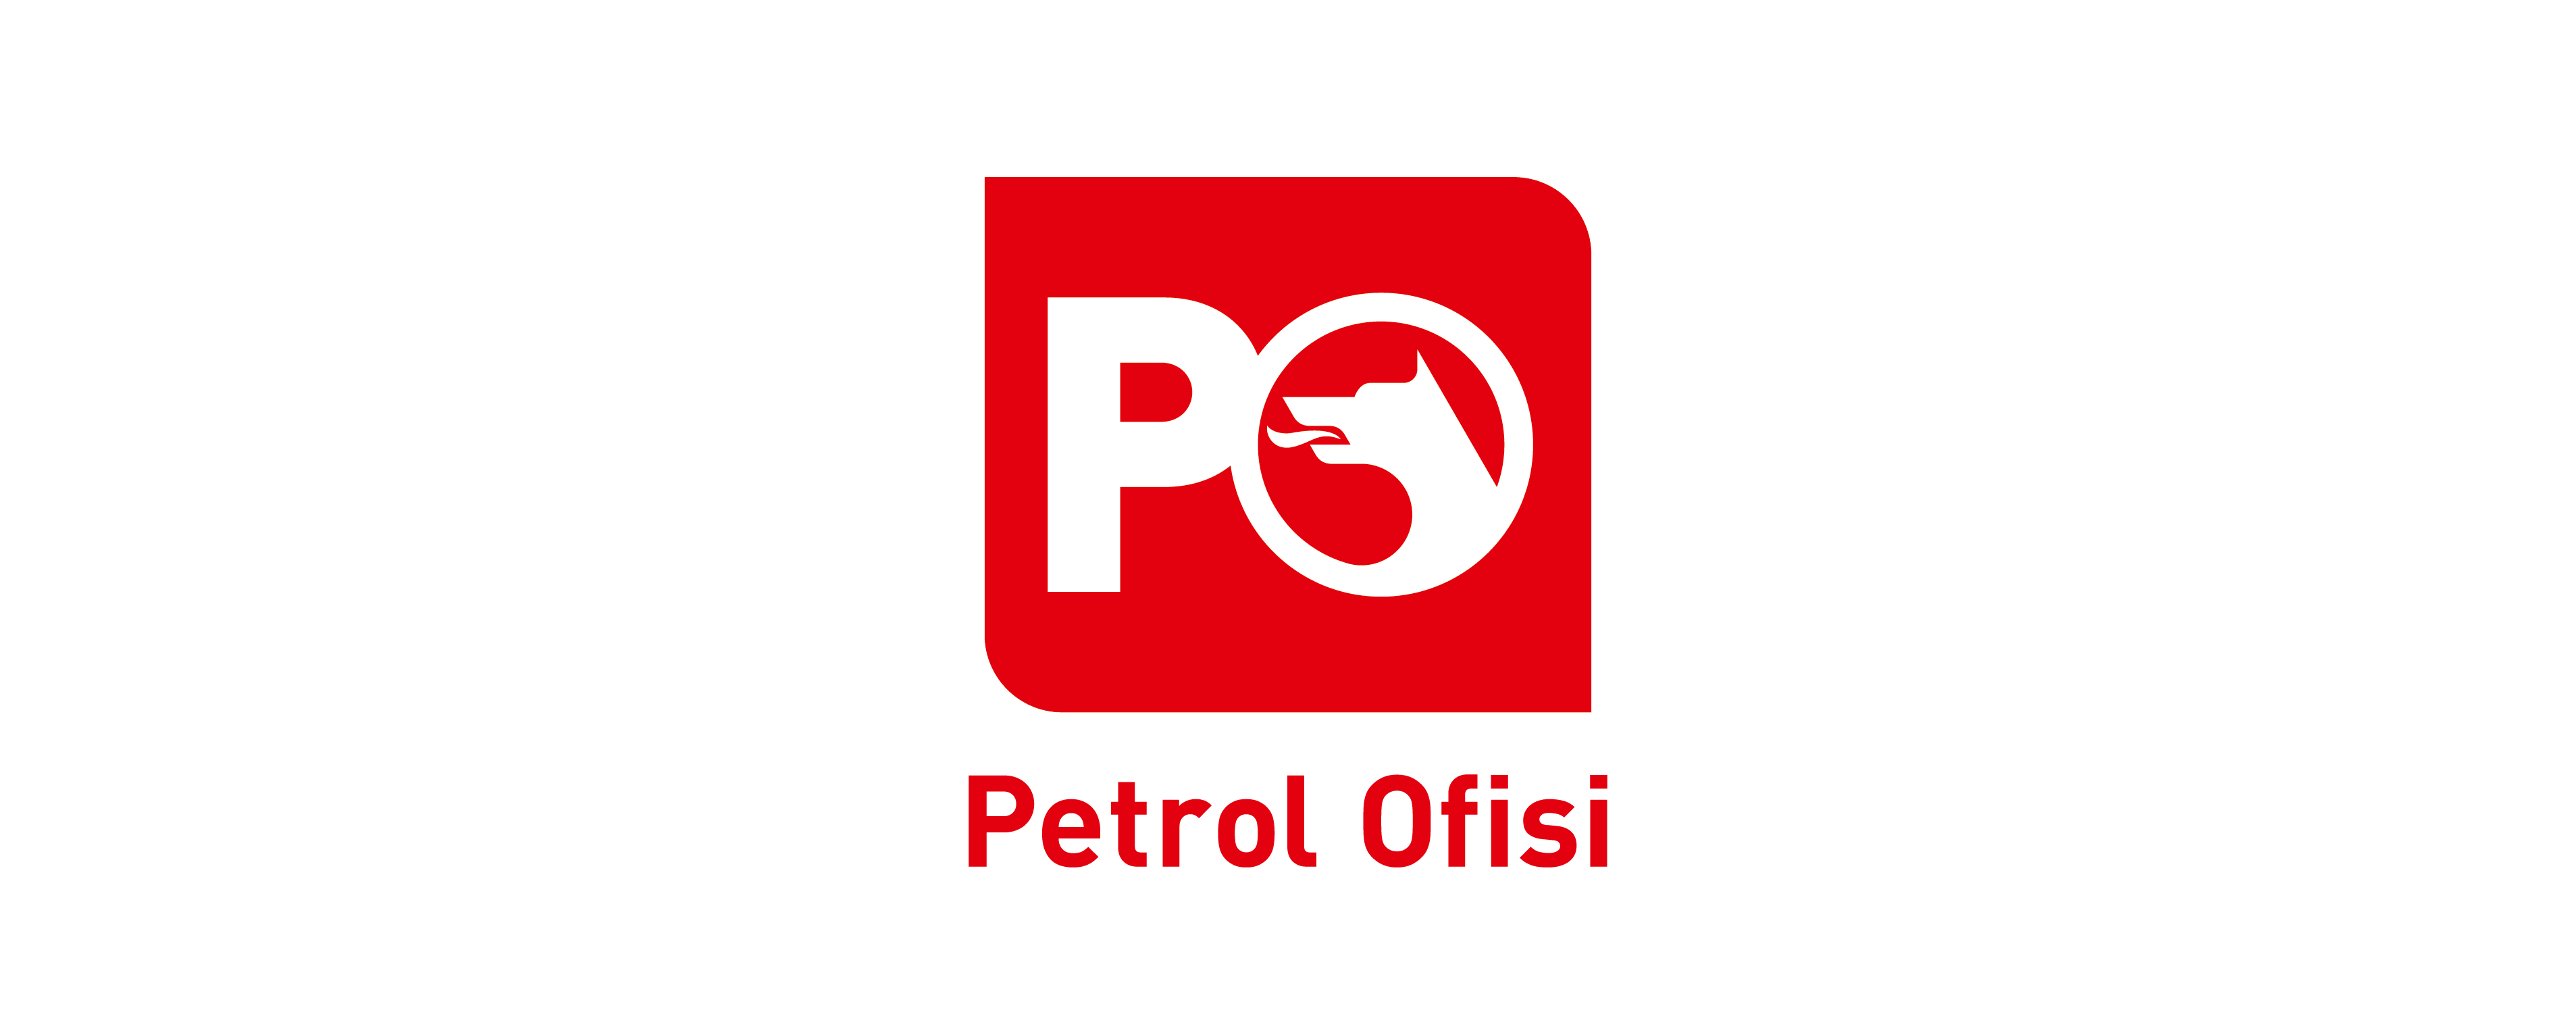 Petrol Ofisi Brand Logo